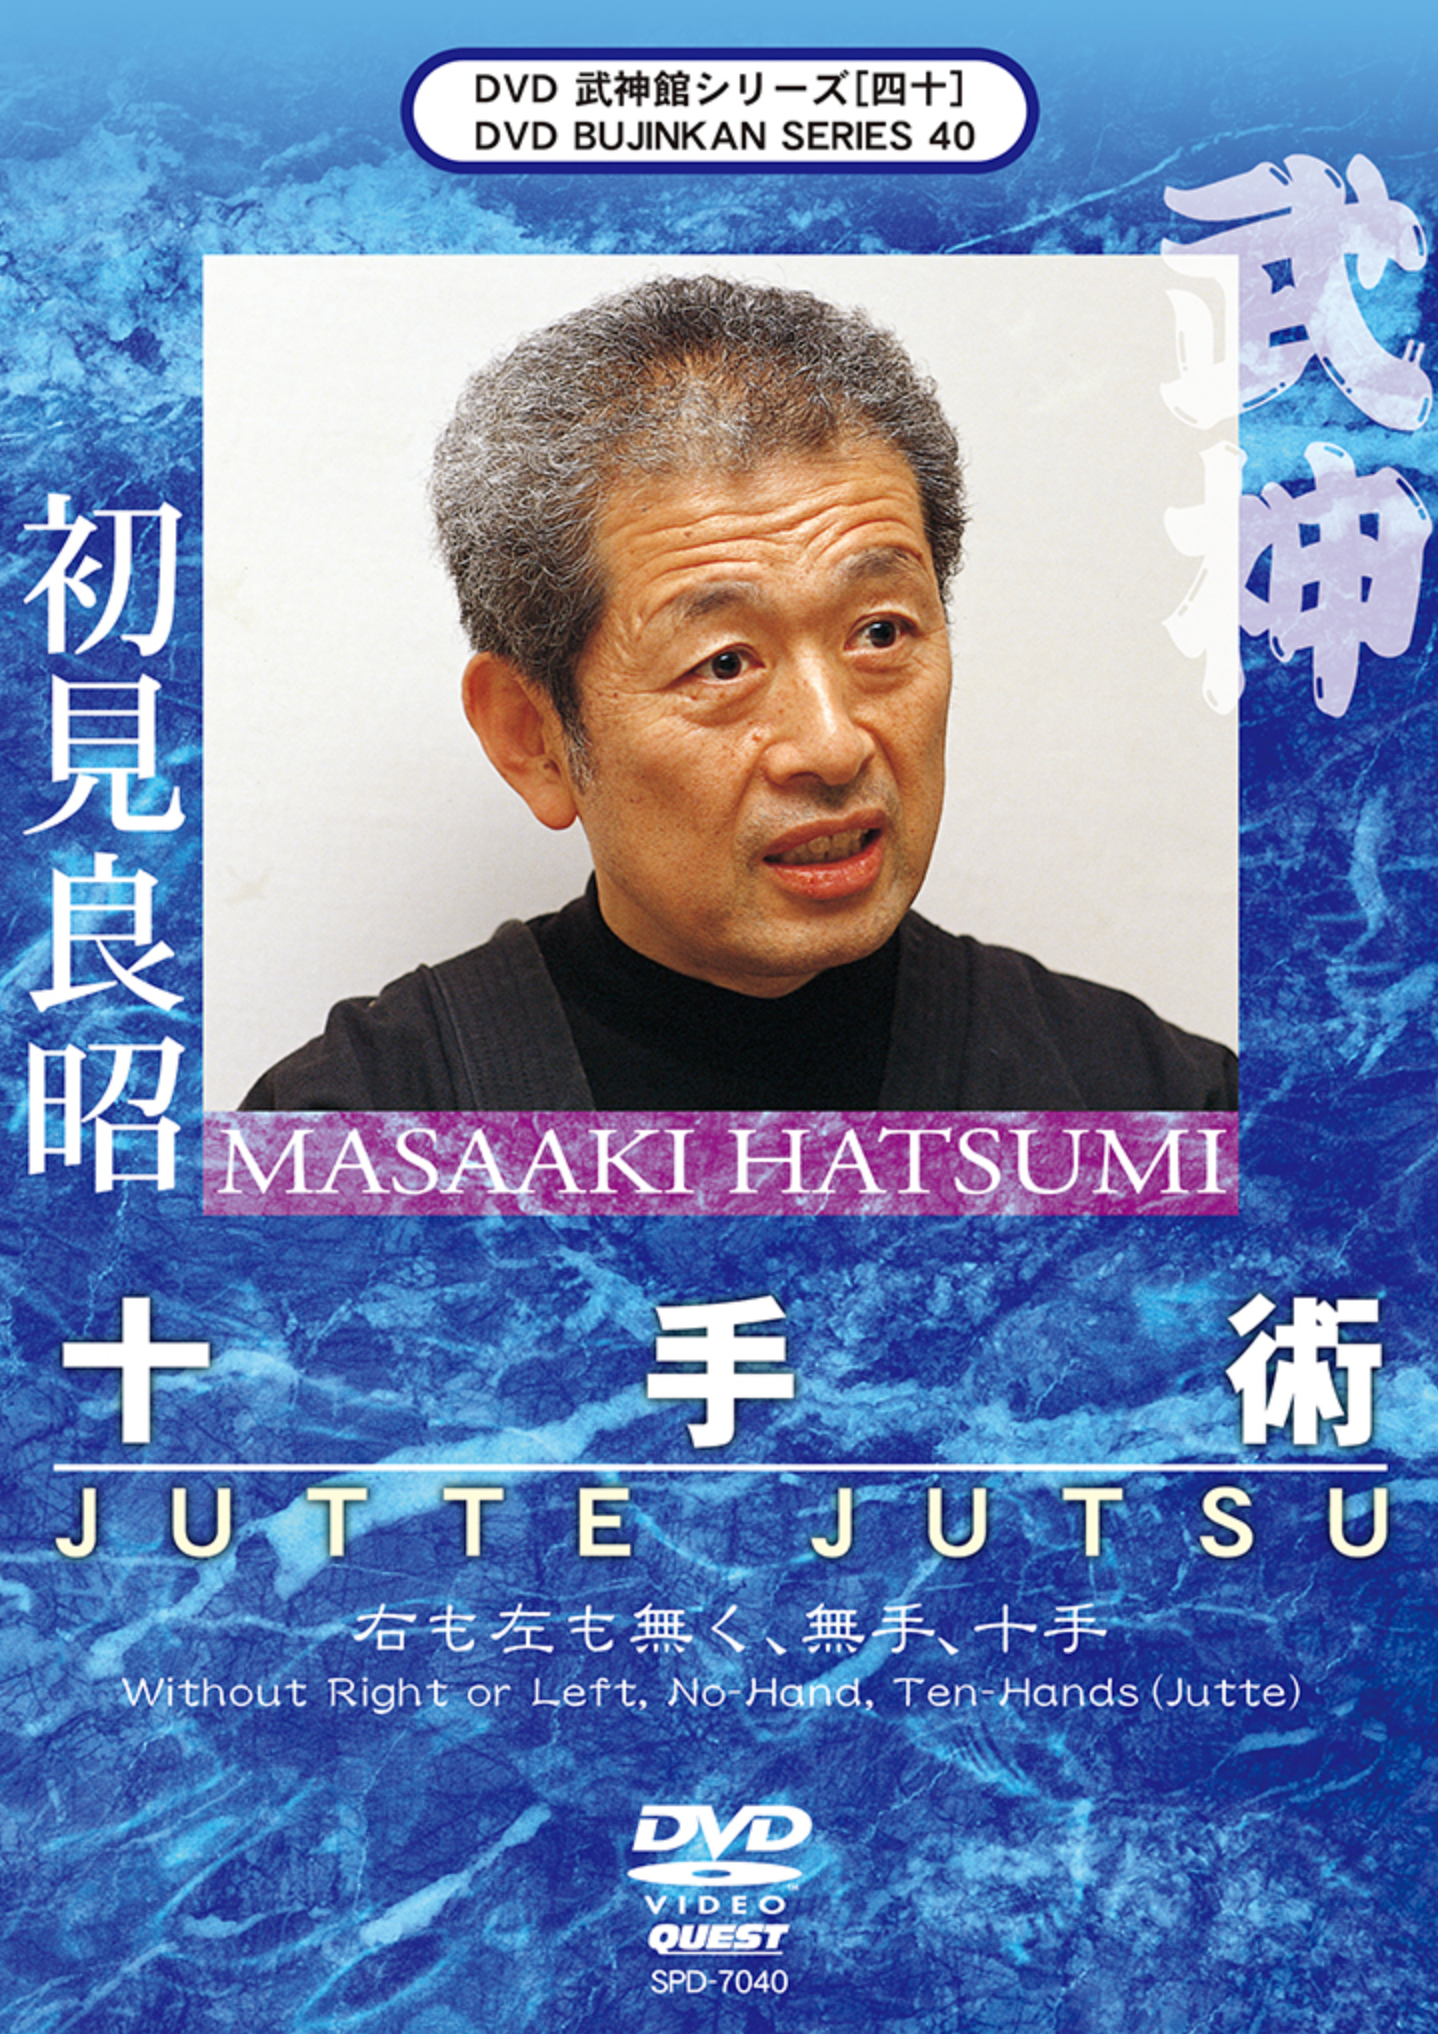 Bujinkan DVD Series 40: Jutte Jutsu with Masaaki Hatsumi - Budovideos Inc